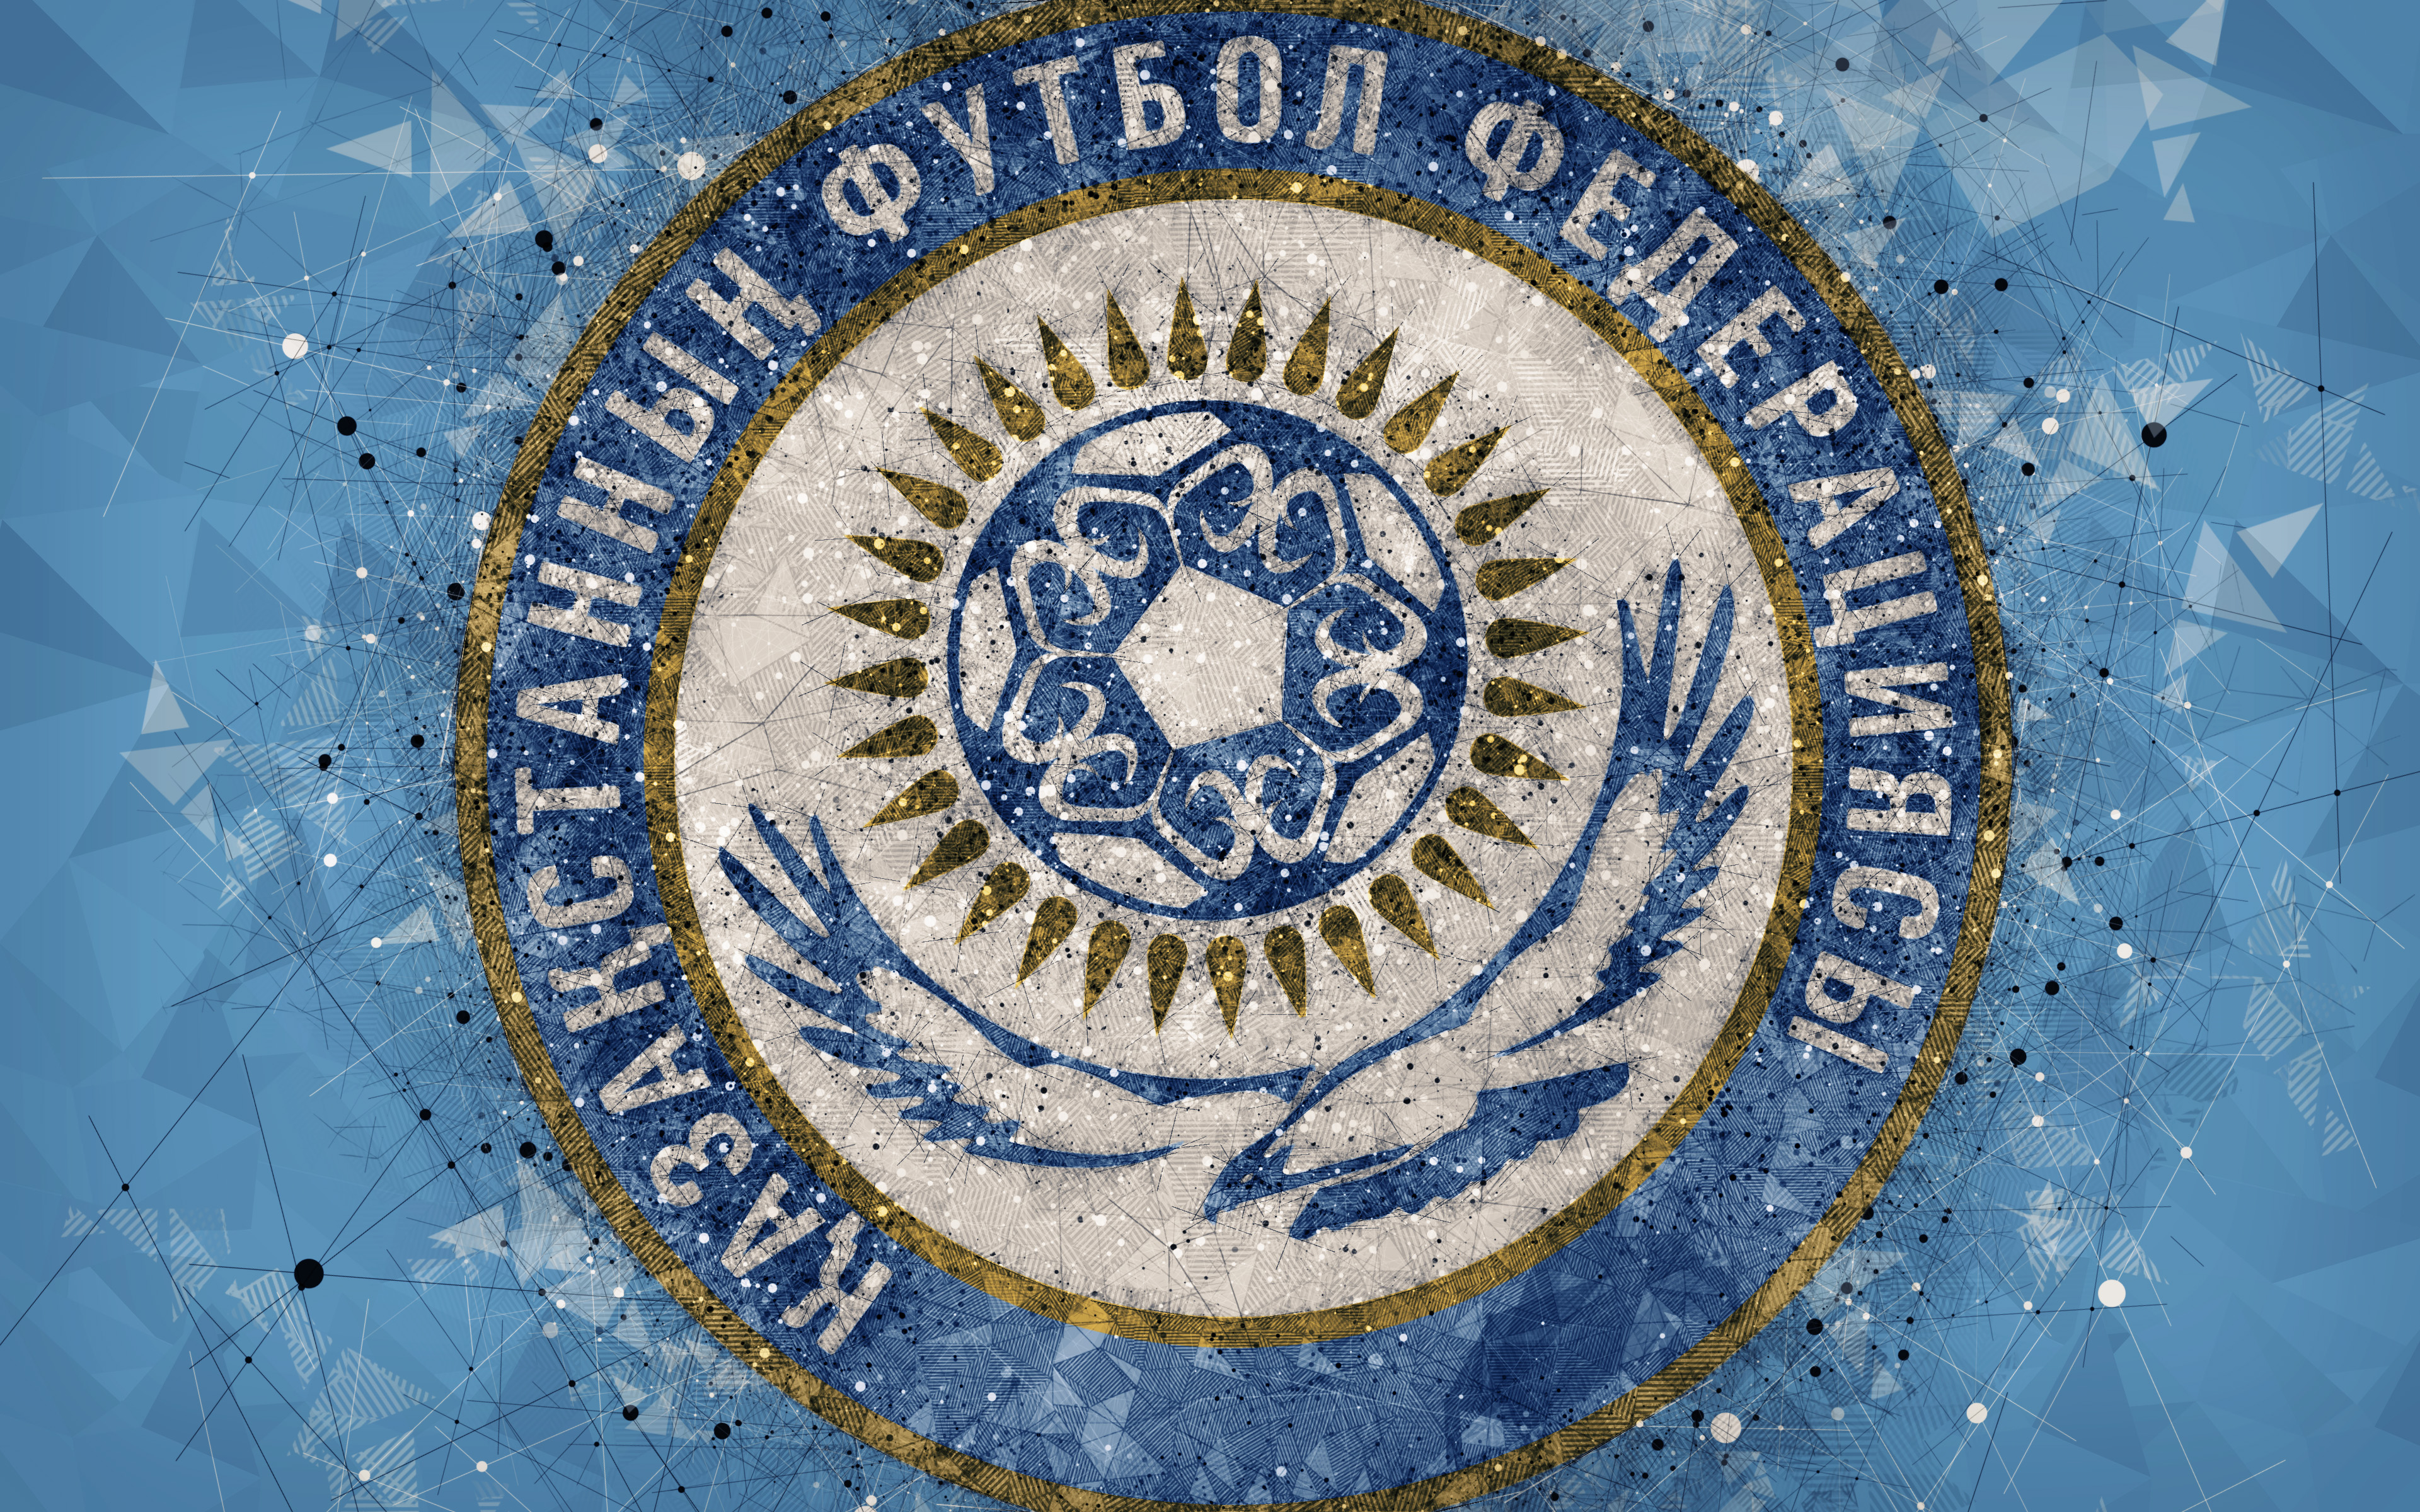 Сборная Казахстана по футболу эмблема